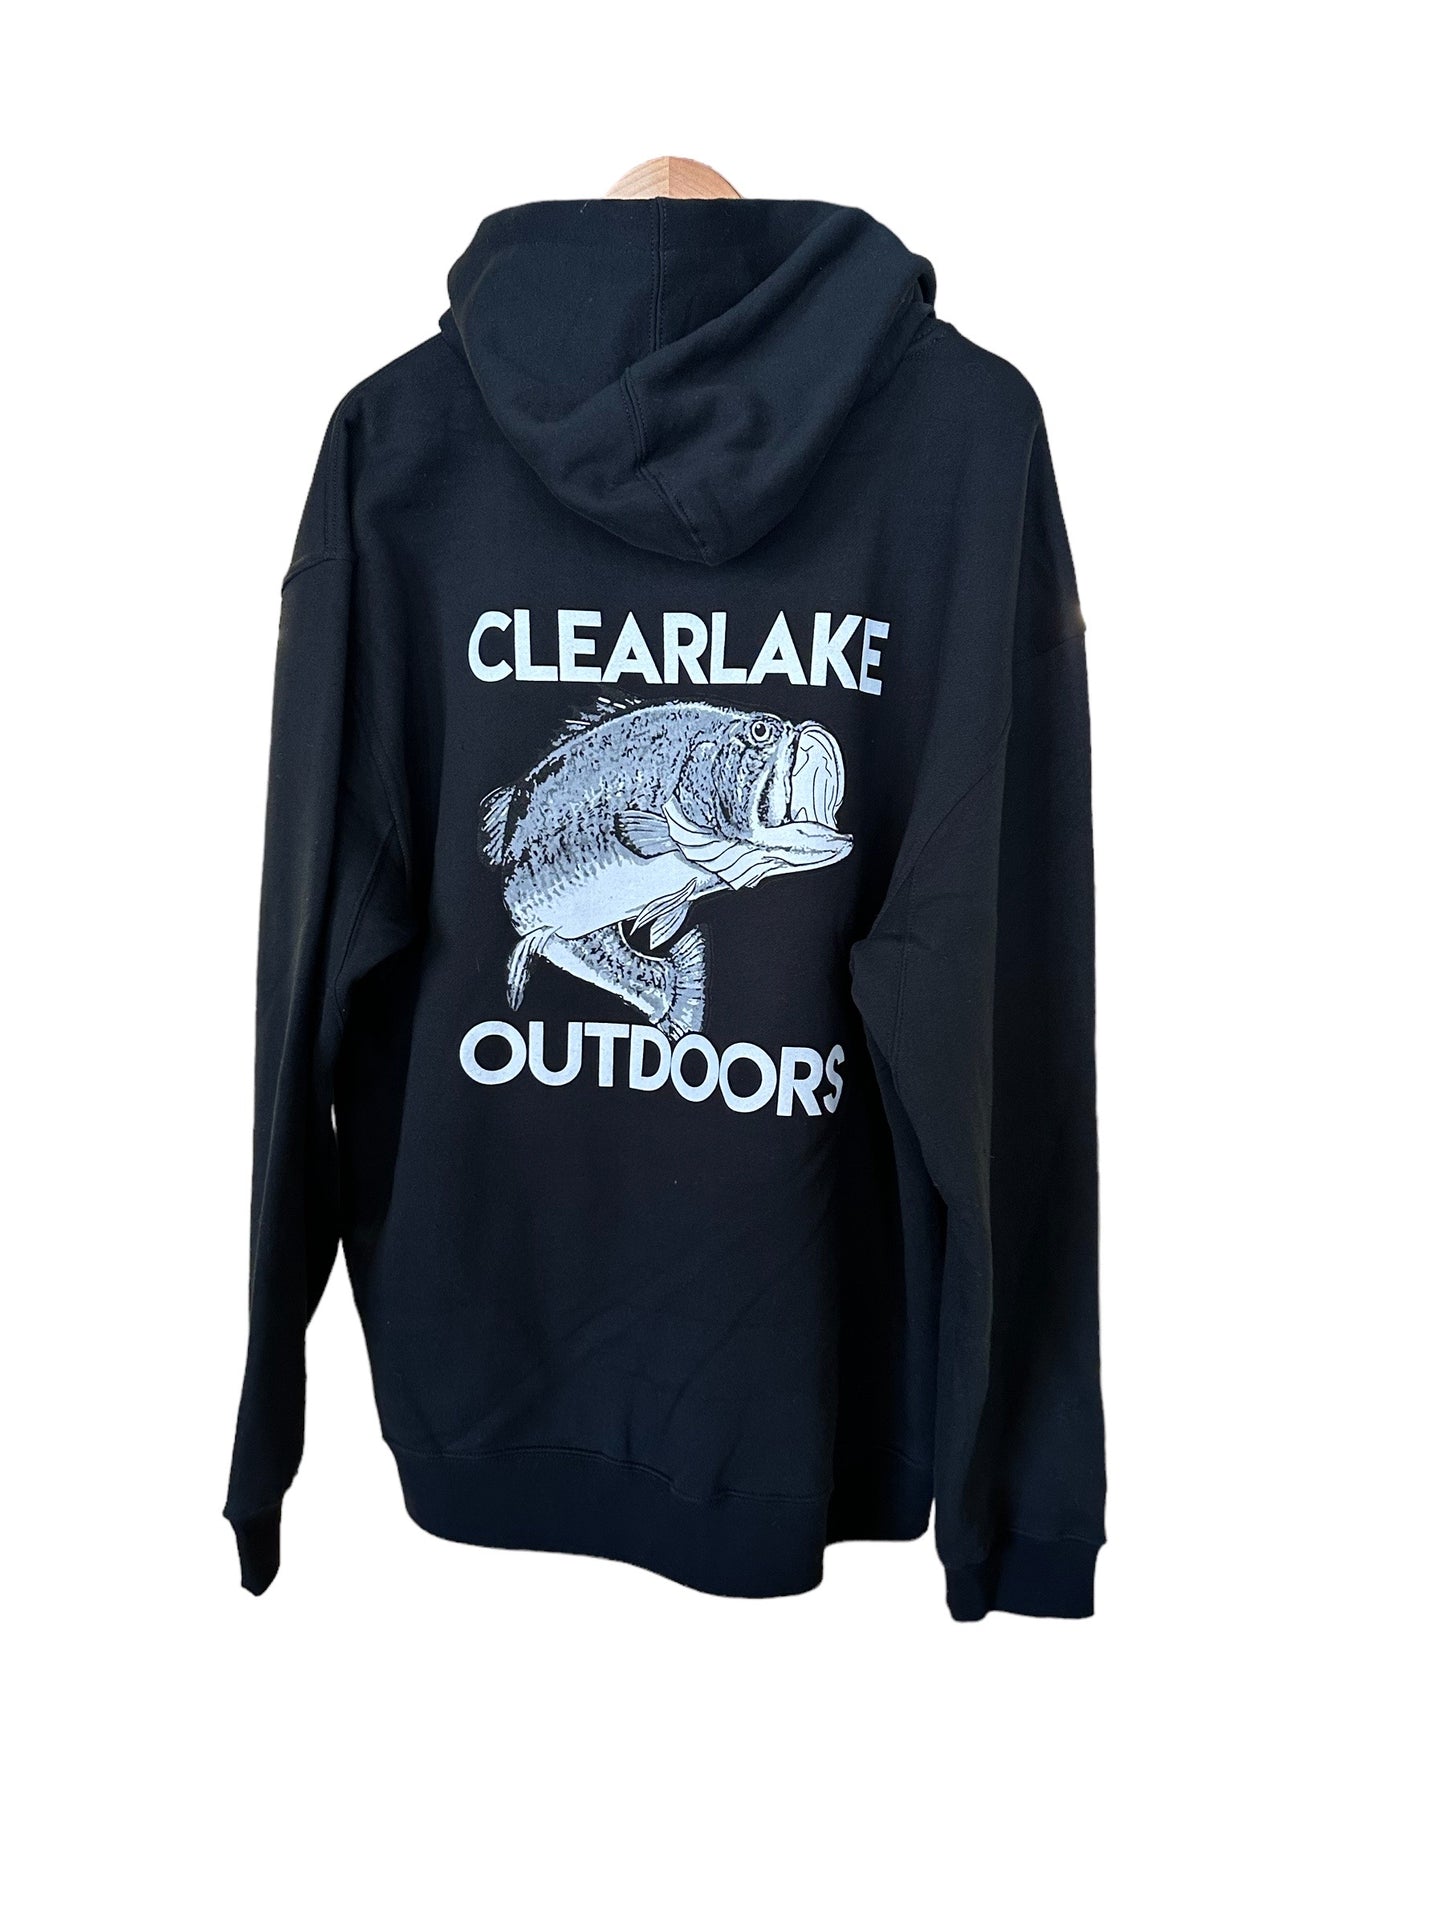 Clearlake Outdoors Branded Hoodies